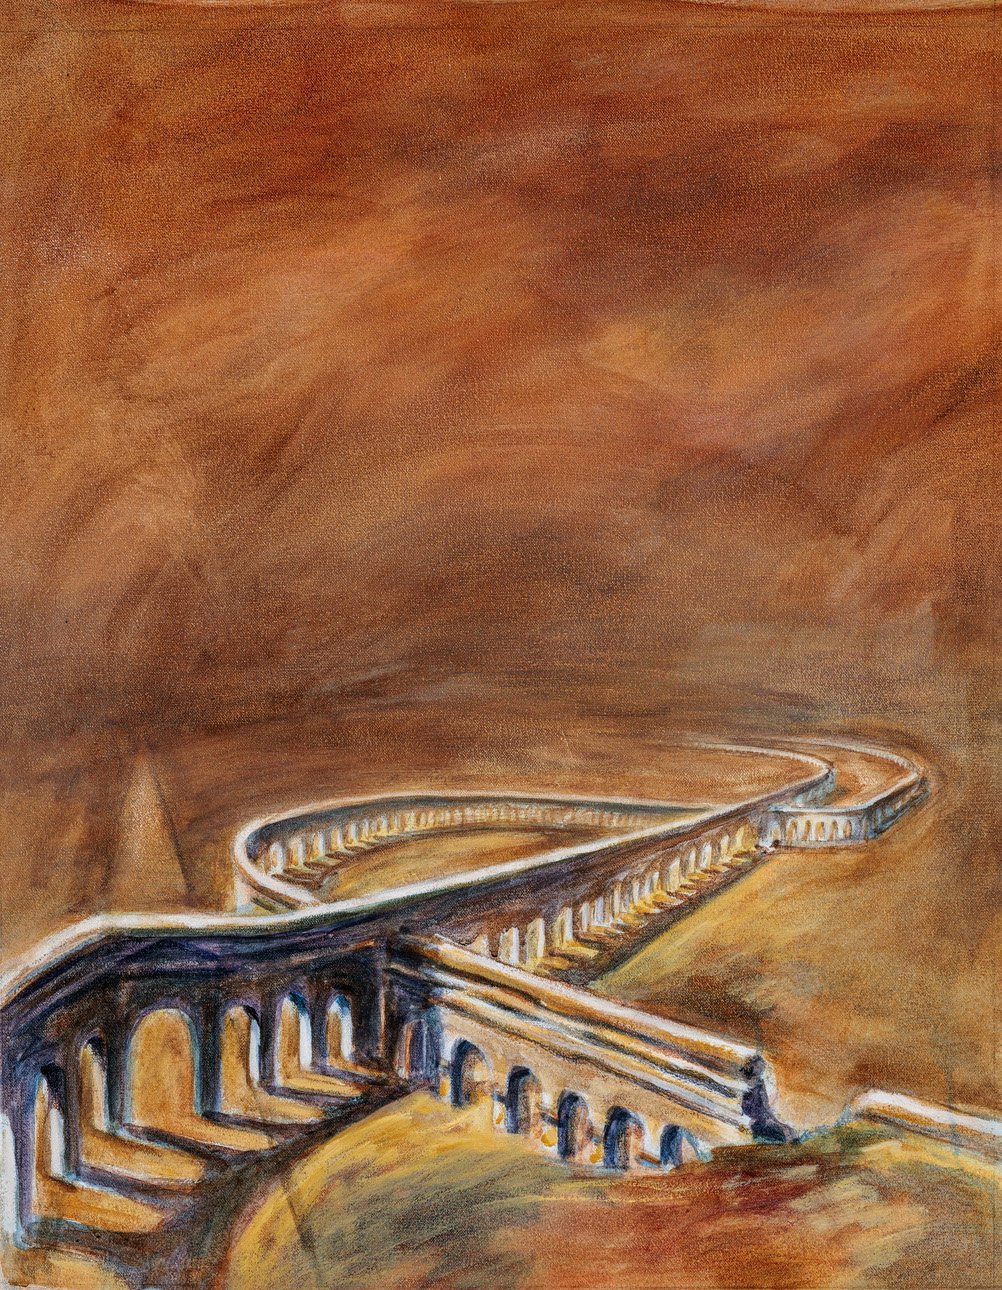 Aqueducts Ruin, Italy - 30” x 24”, Acrylic on Canvas, $1200